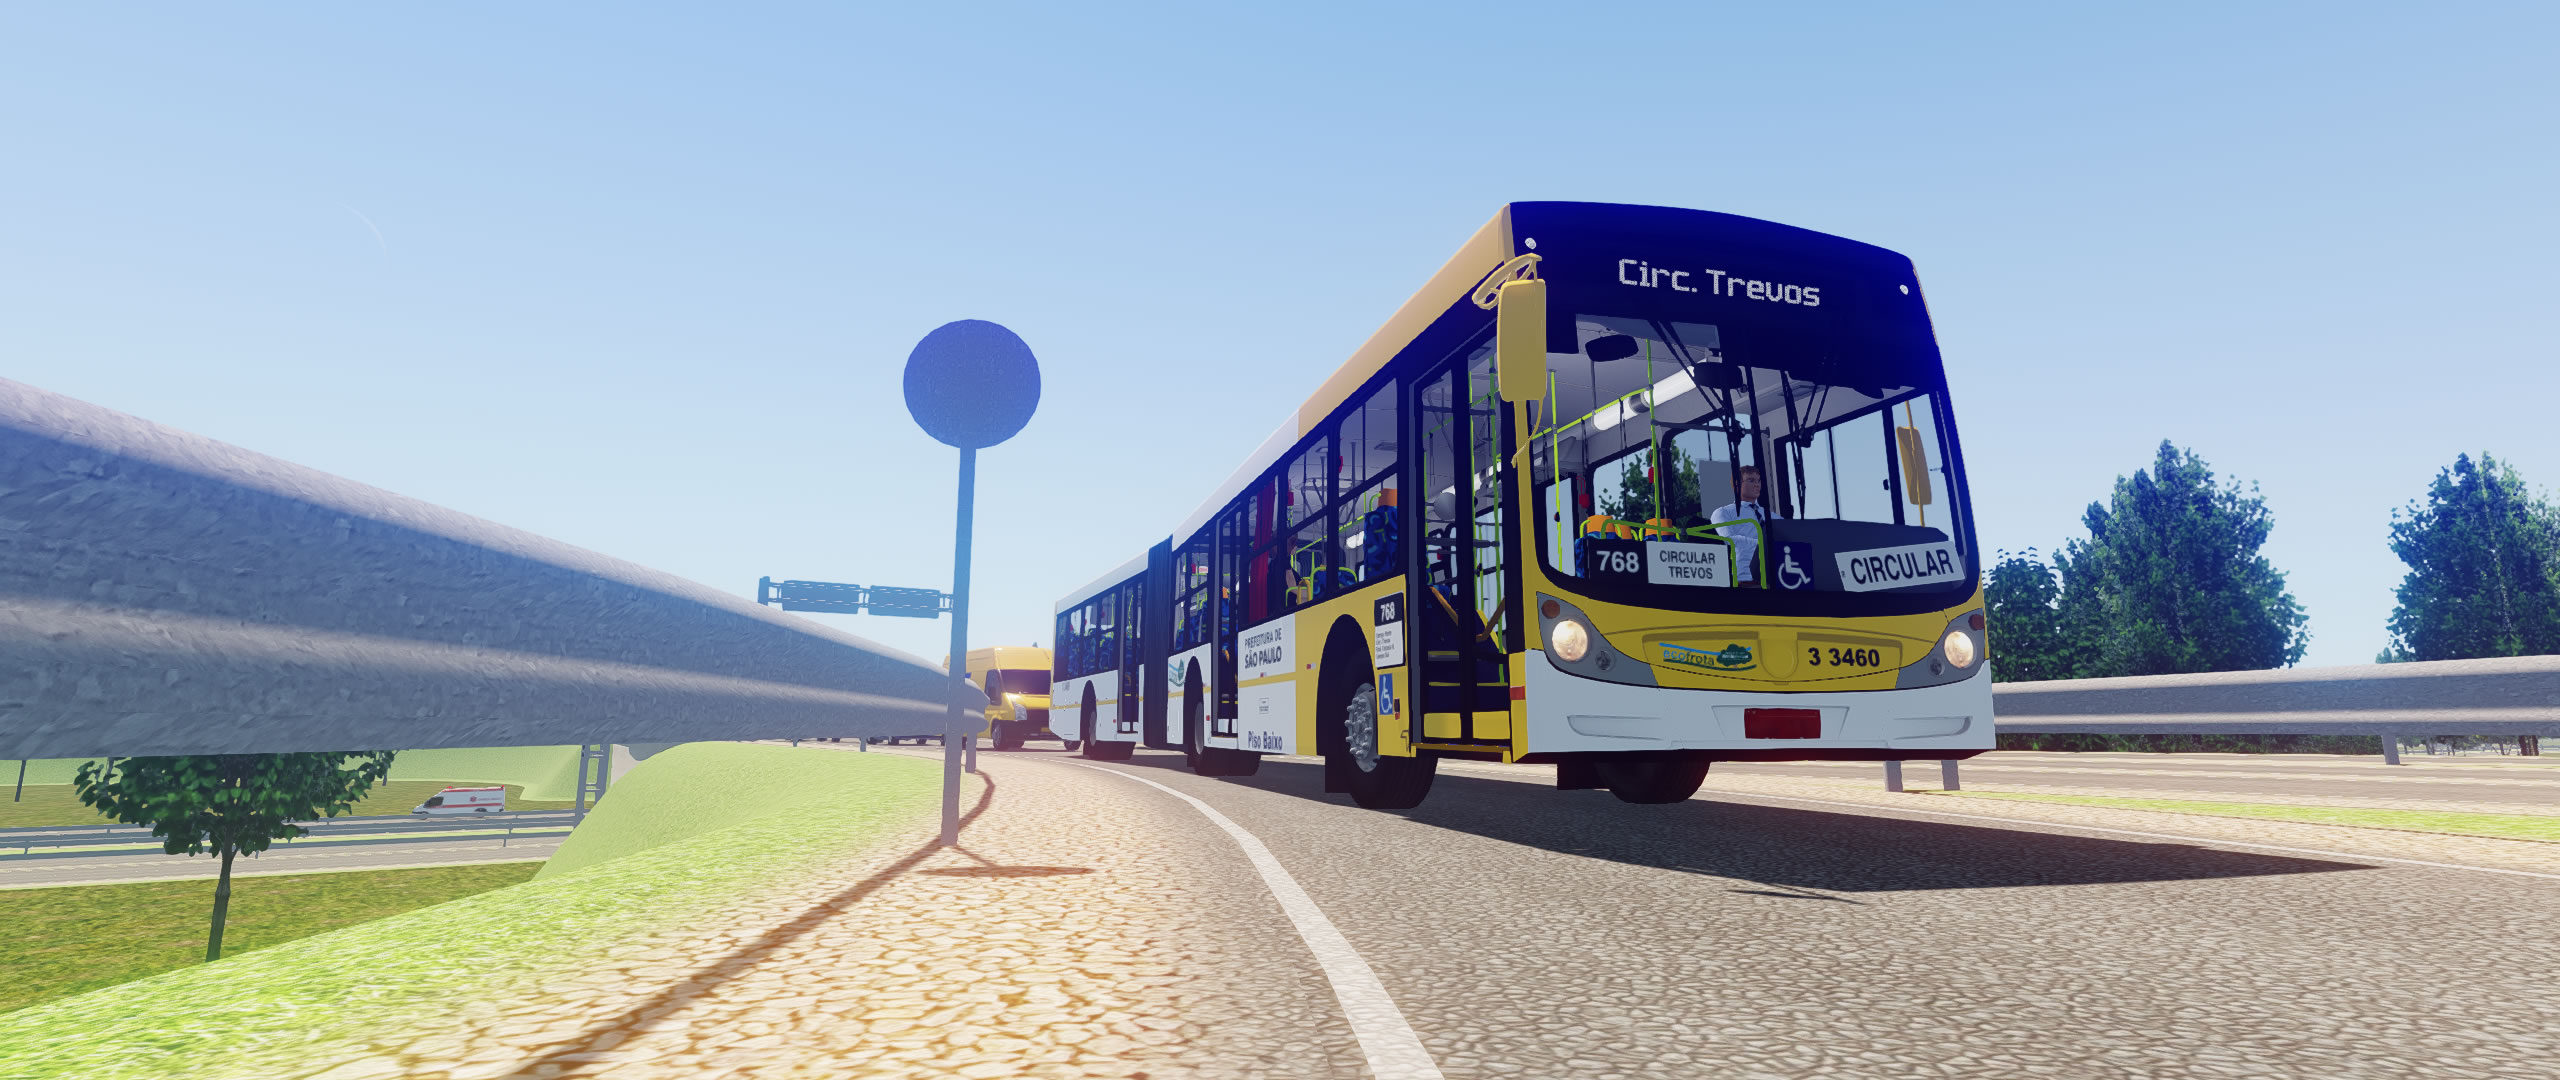 proton bus simulator mod